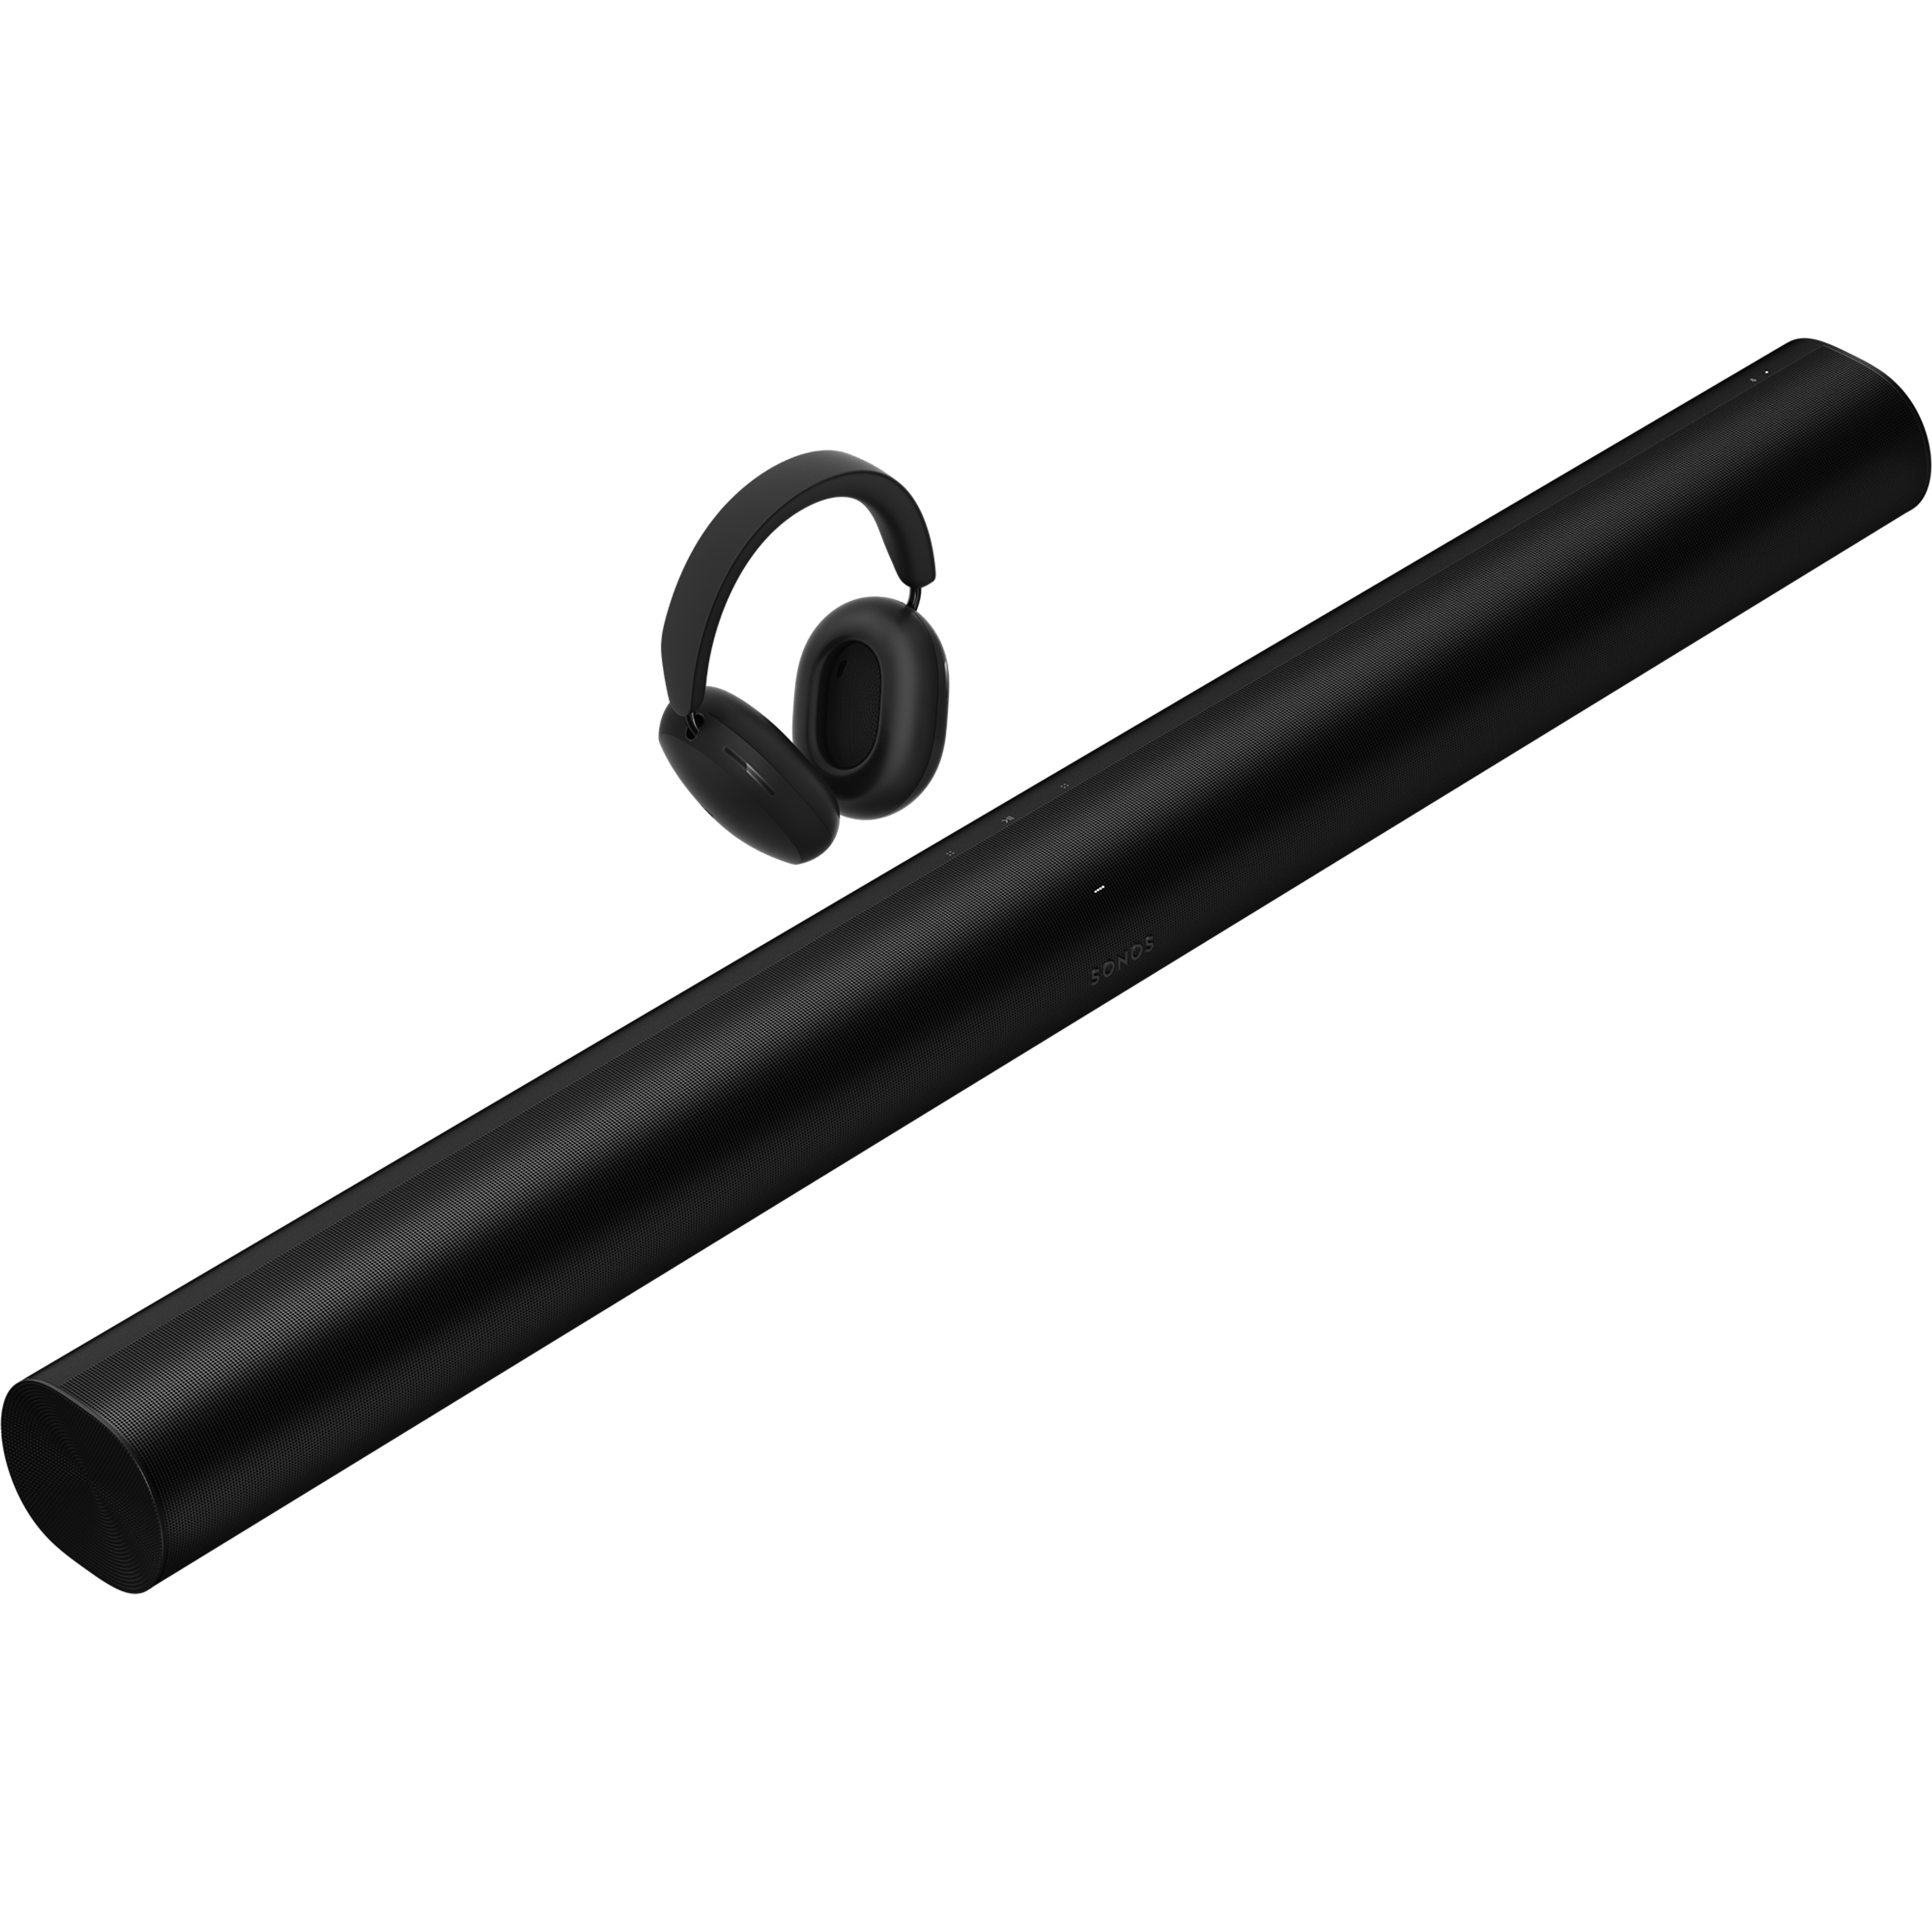 Black Sonos Ace headphones with a black Arc